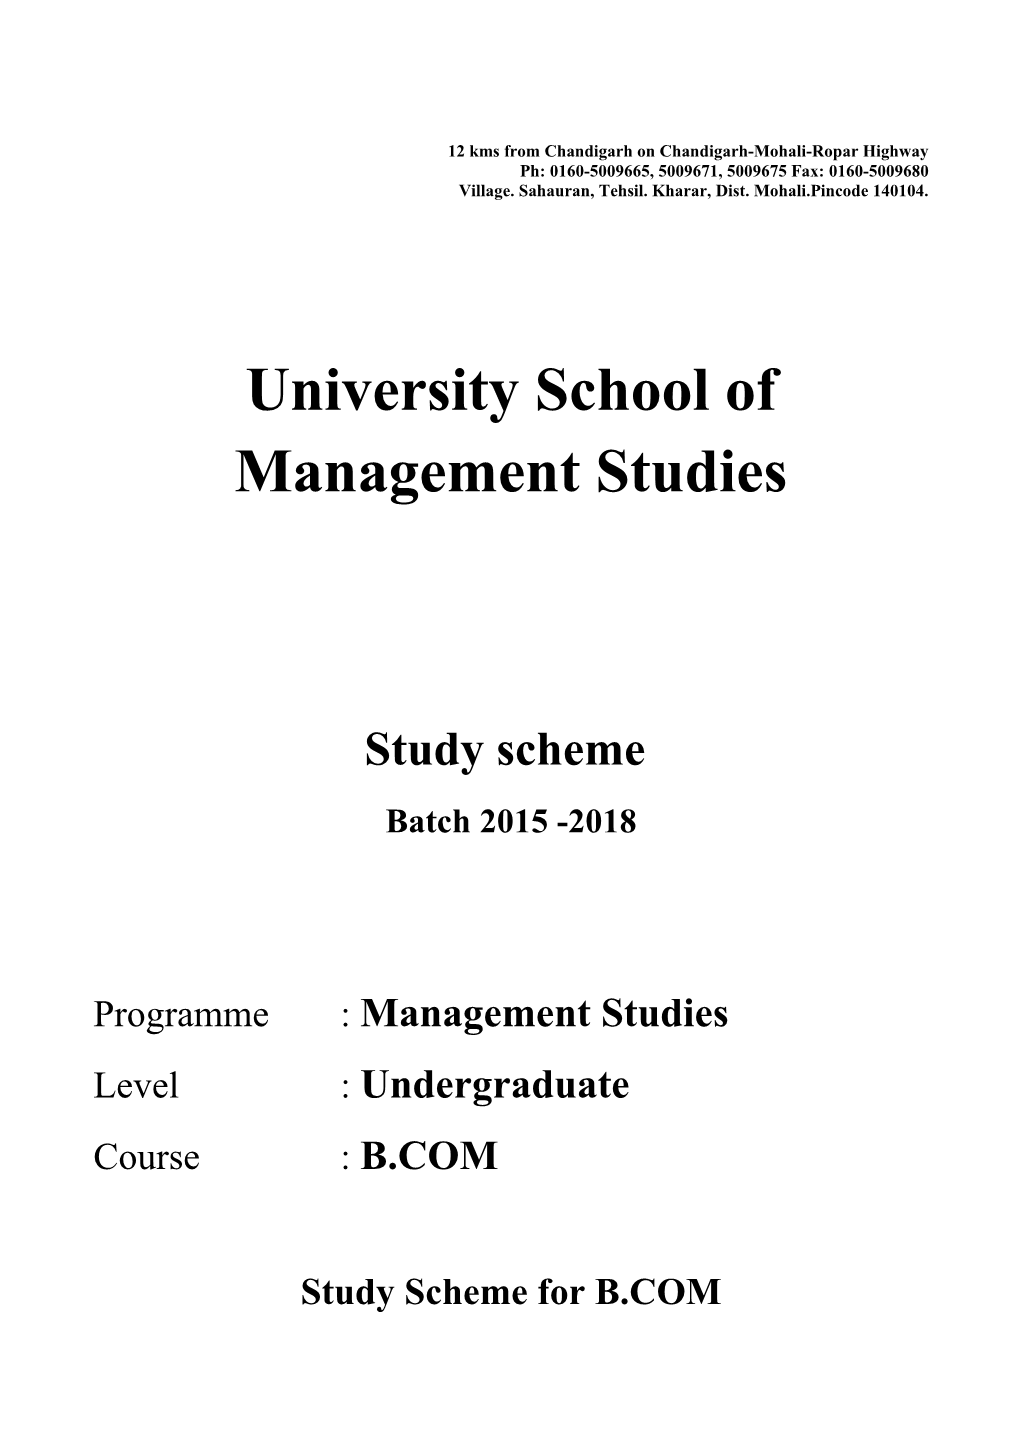 University School of Management Studies B.COM Syllabus